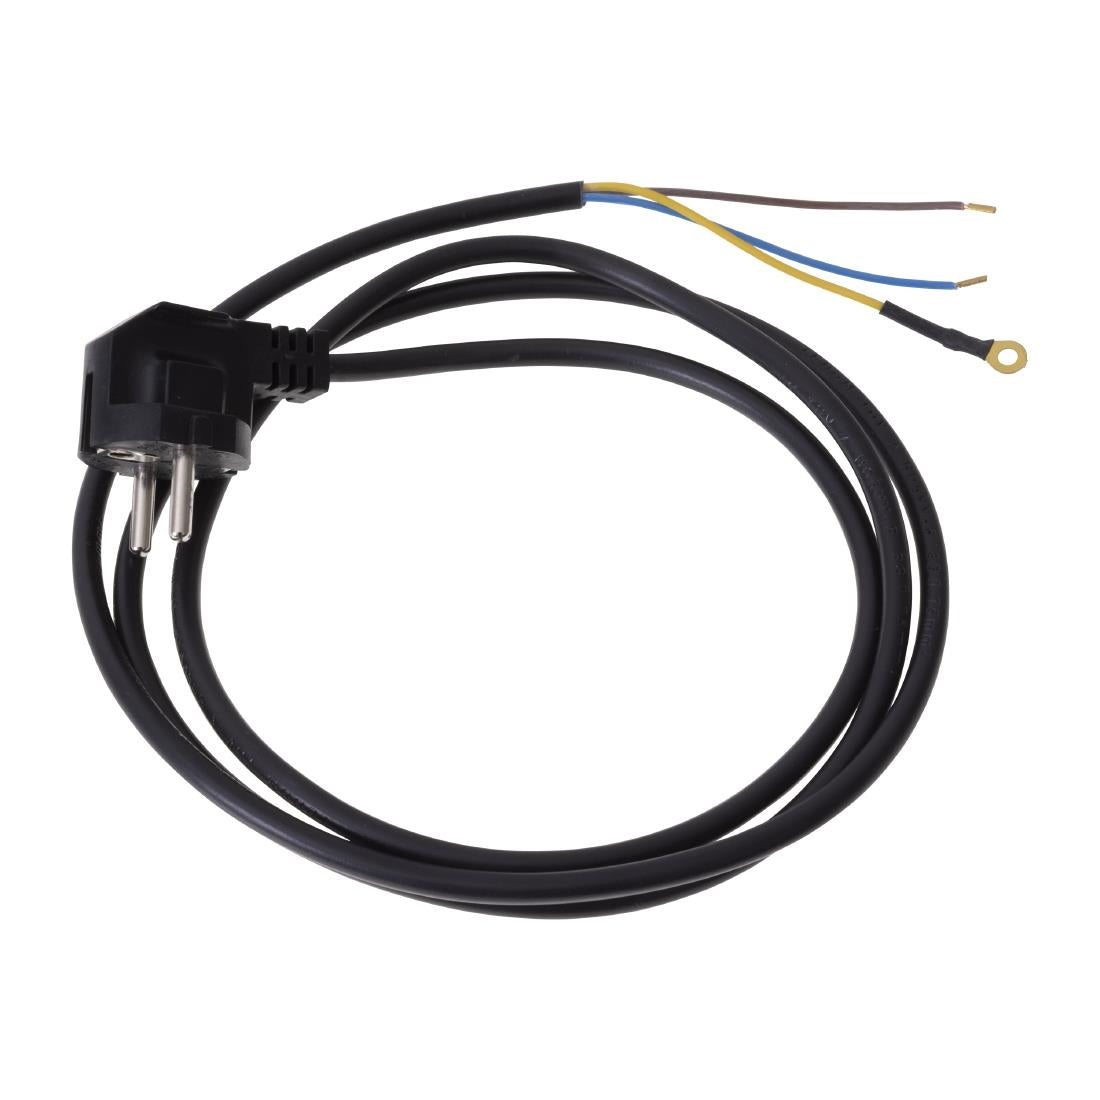 AT002 Buffalo 600 Series Supply Cable With EU Plug